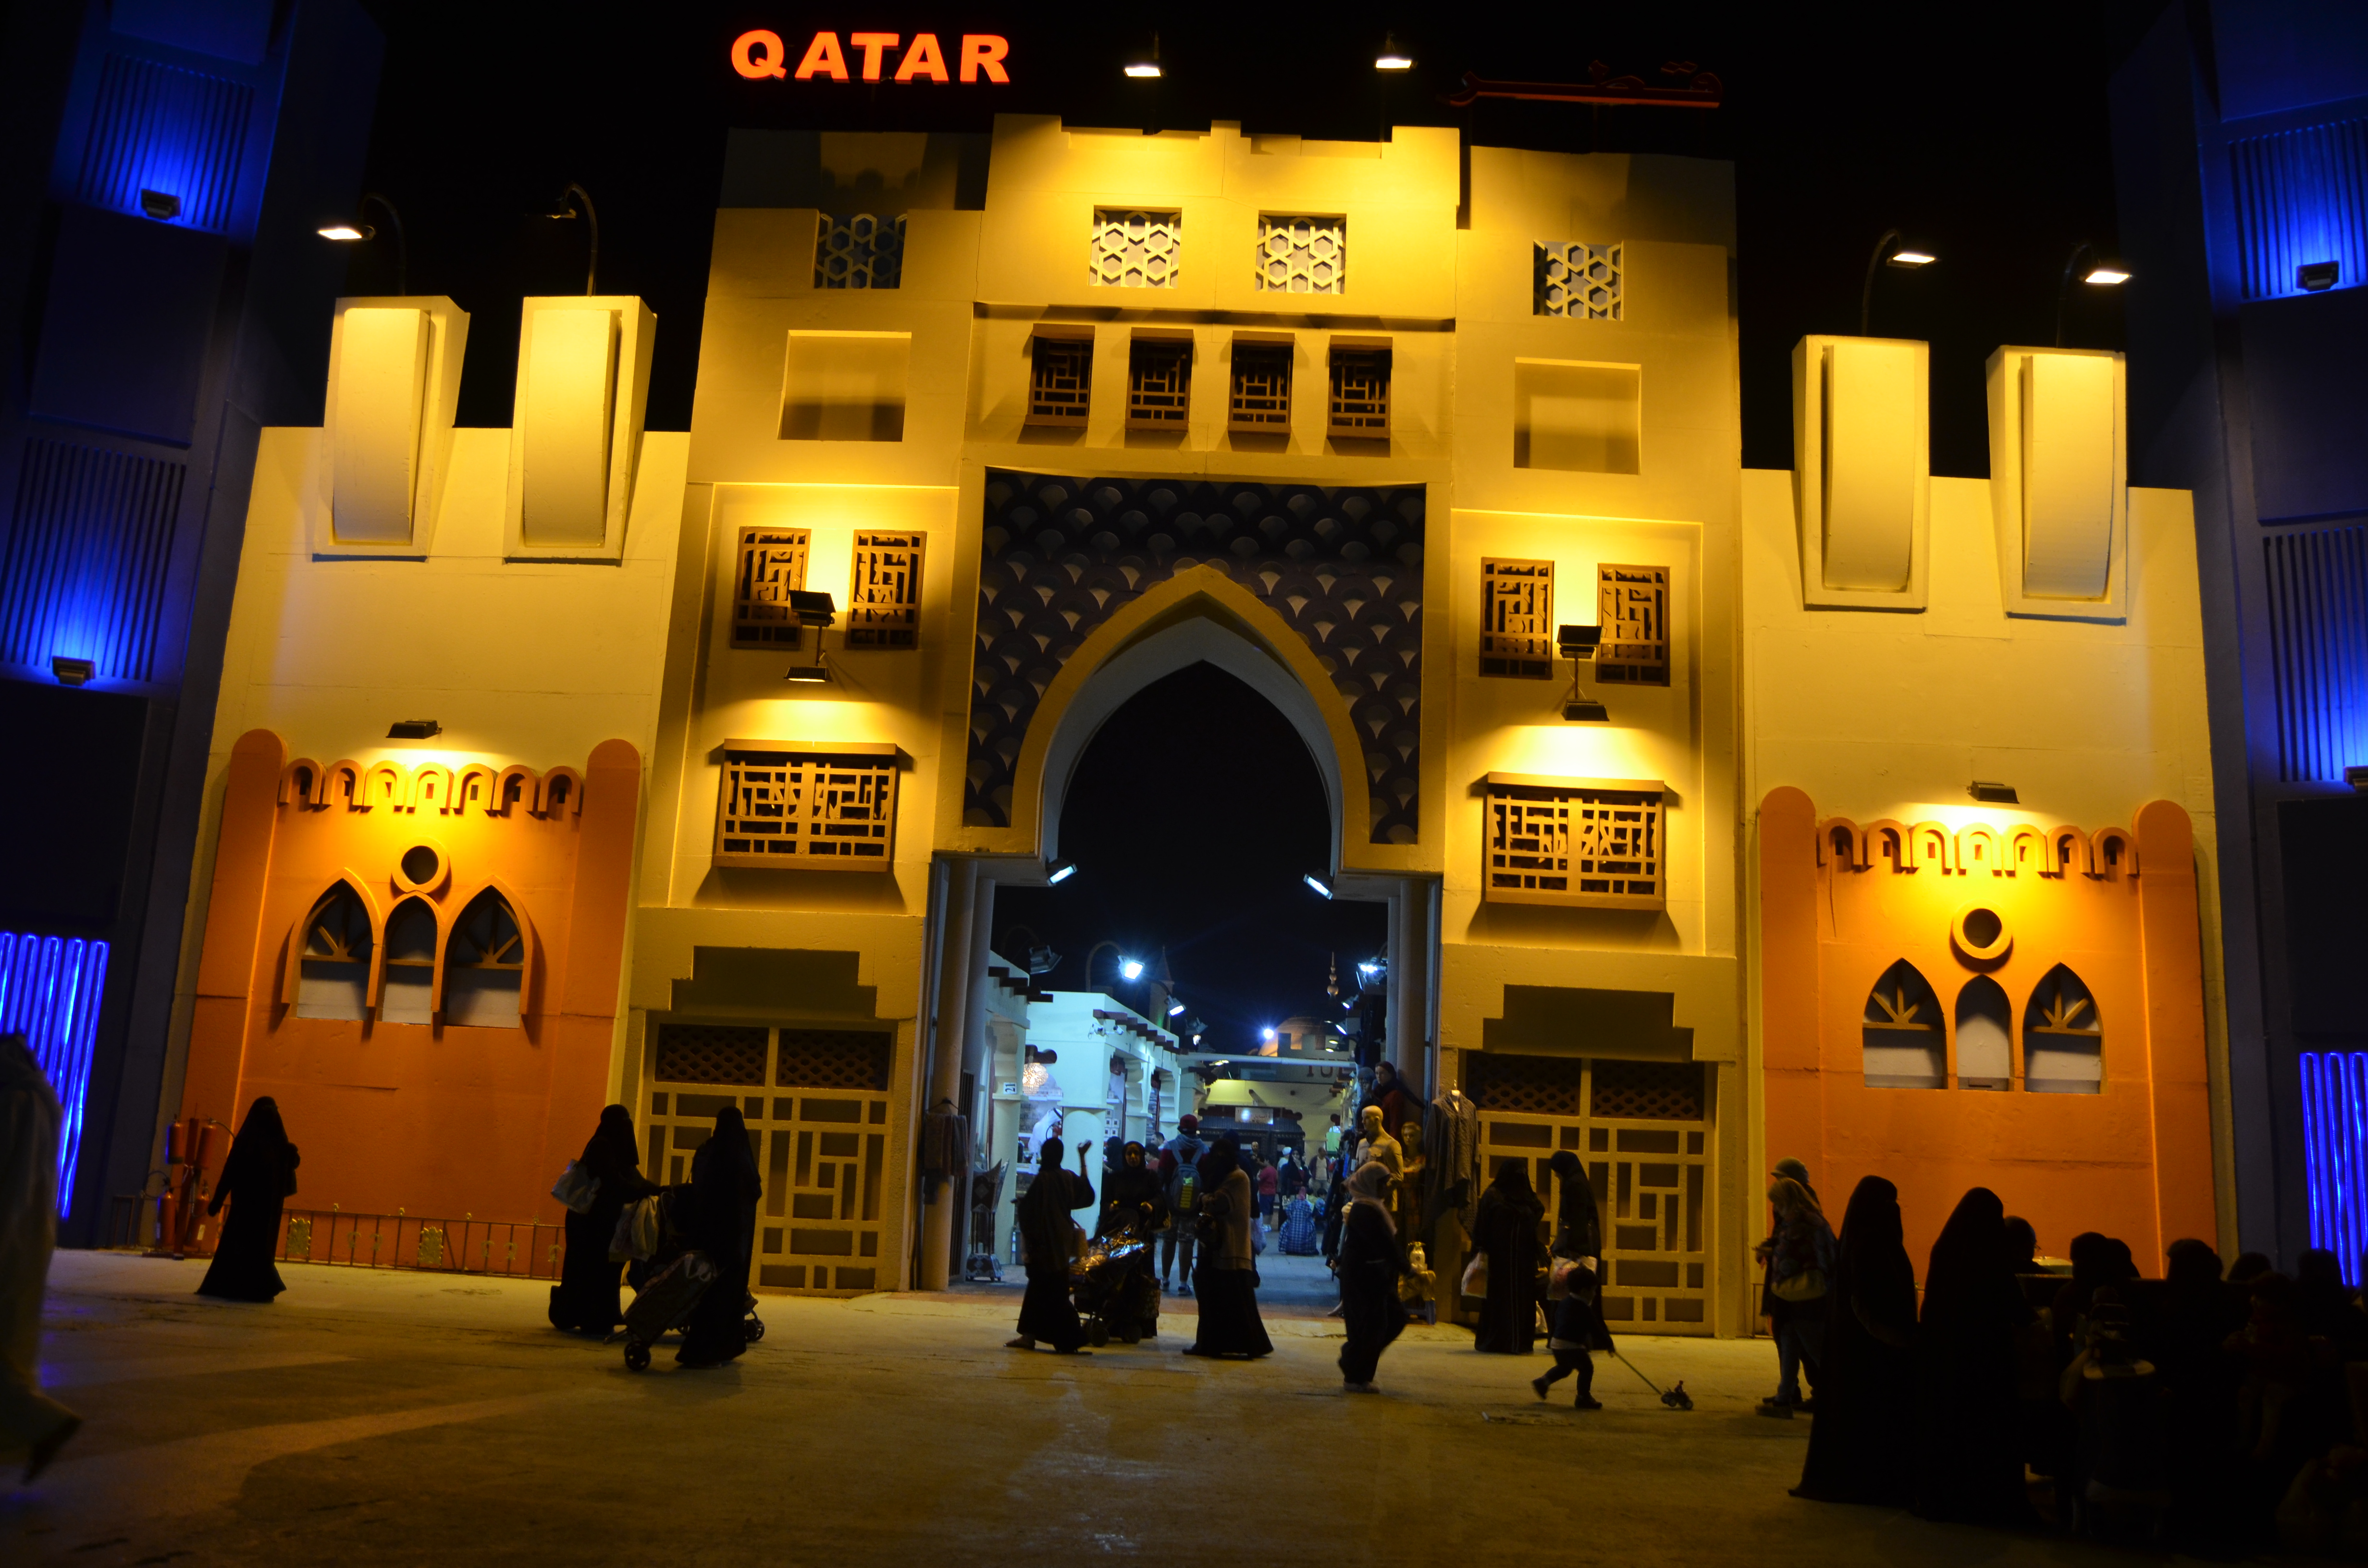 Qatar stall at Global Village